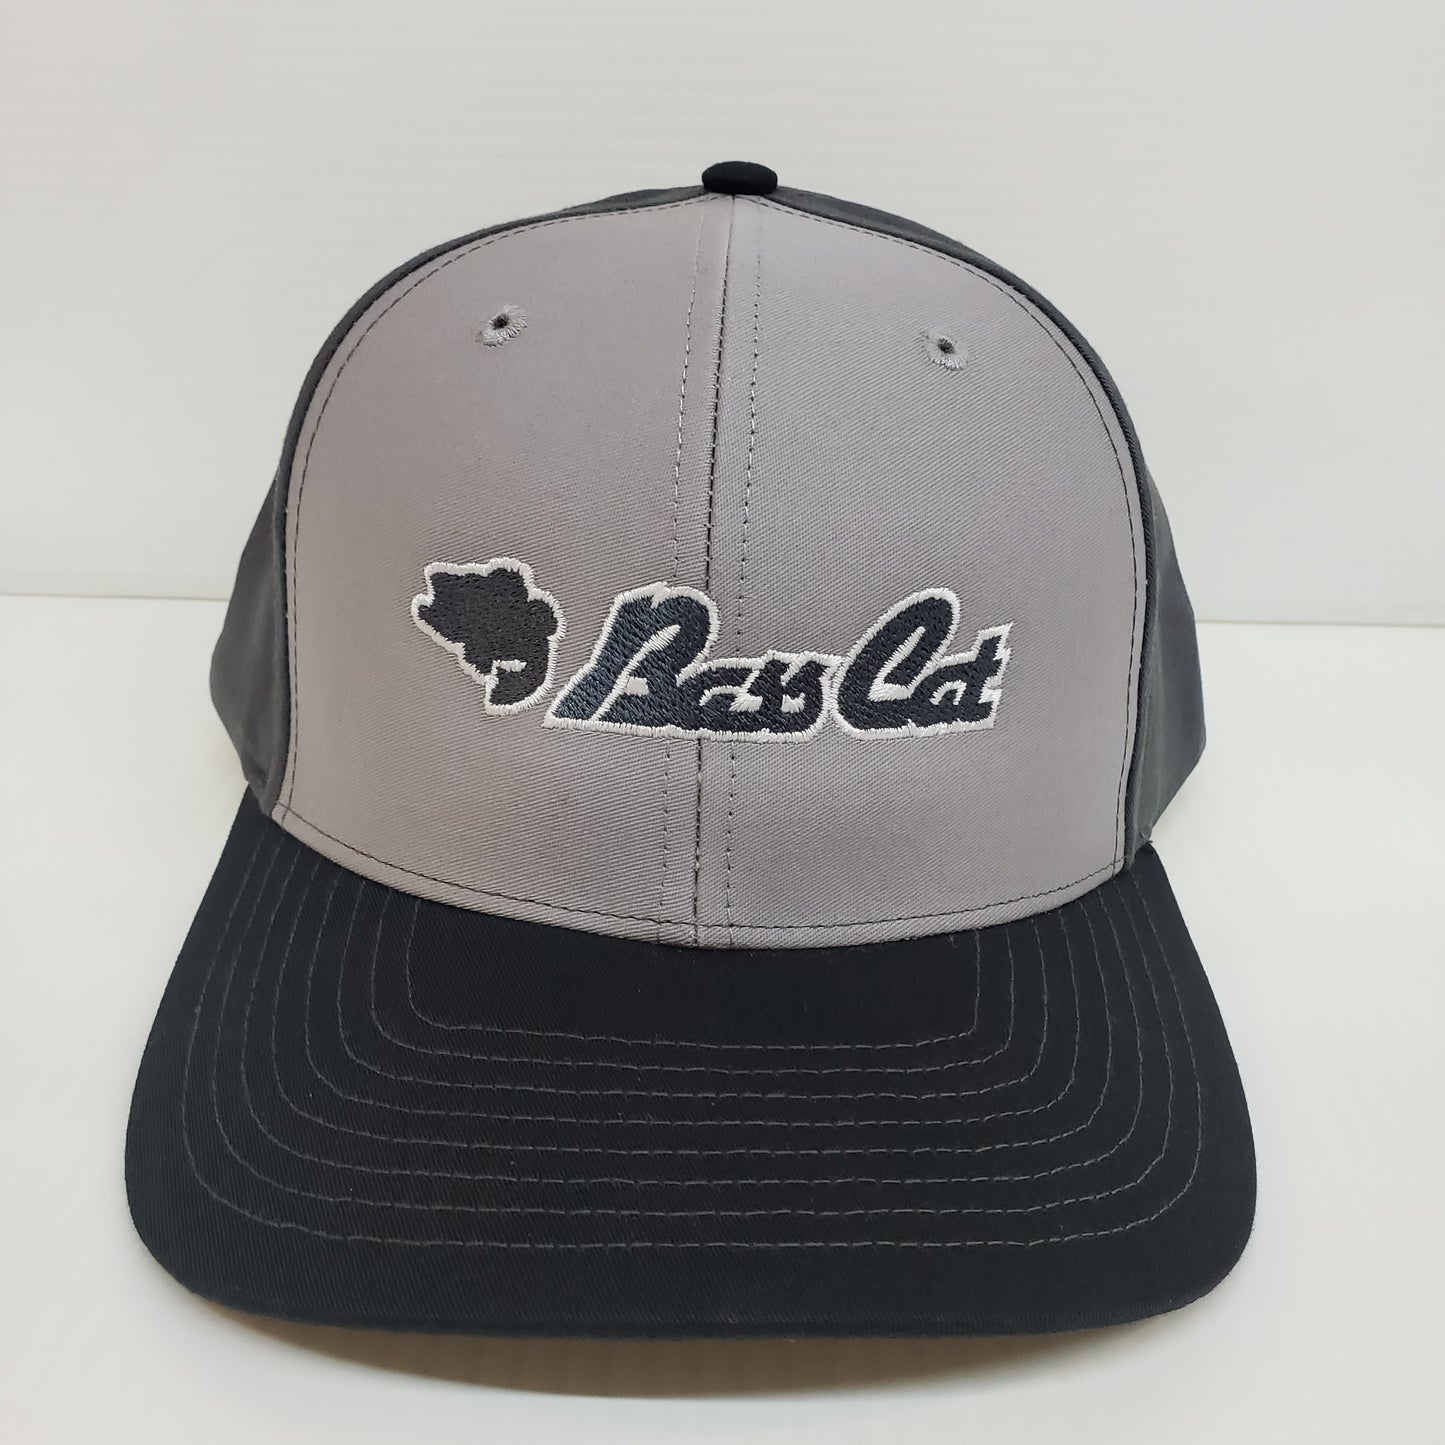 Bass Cat Hat- Black/Gray/Charcoal Cloth